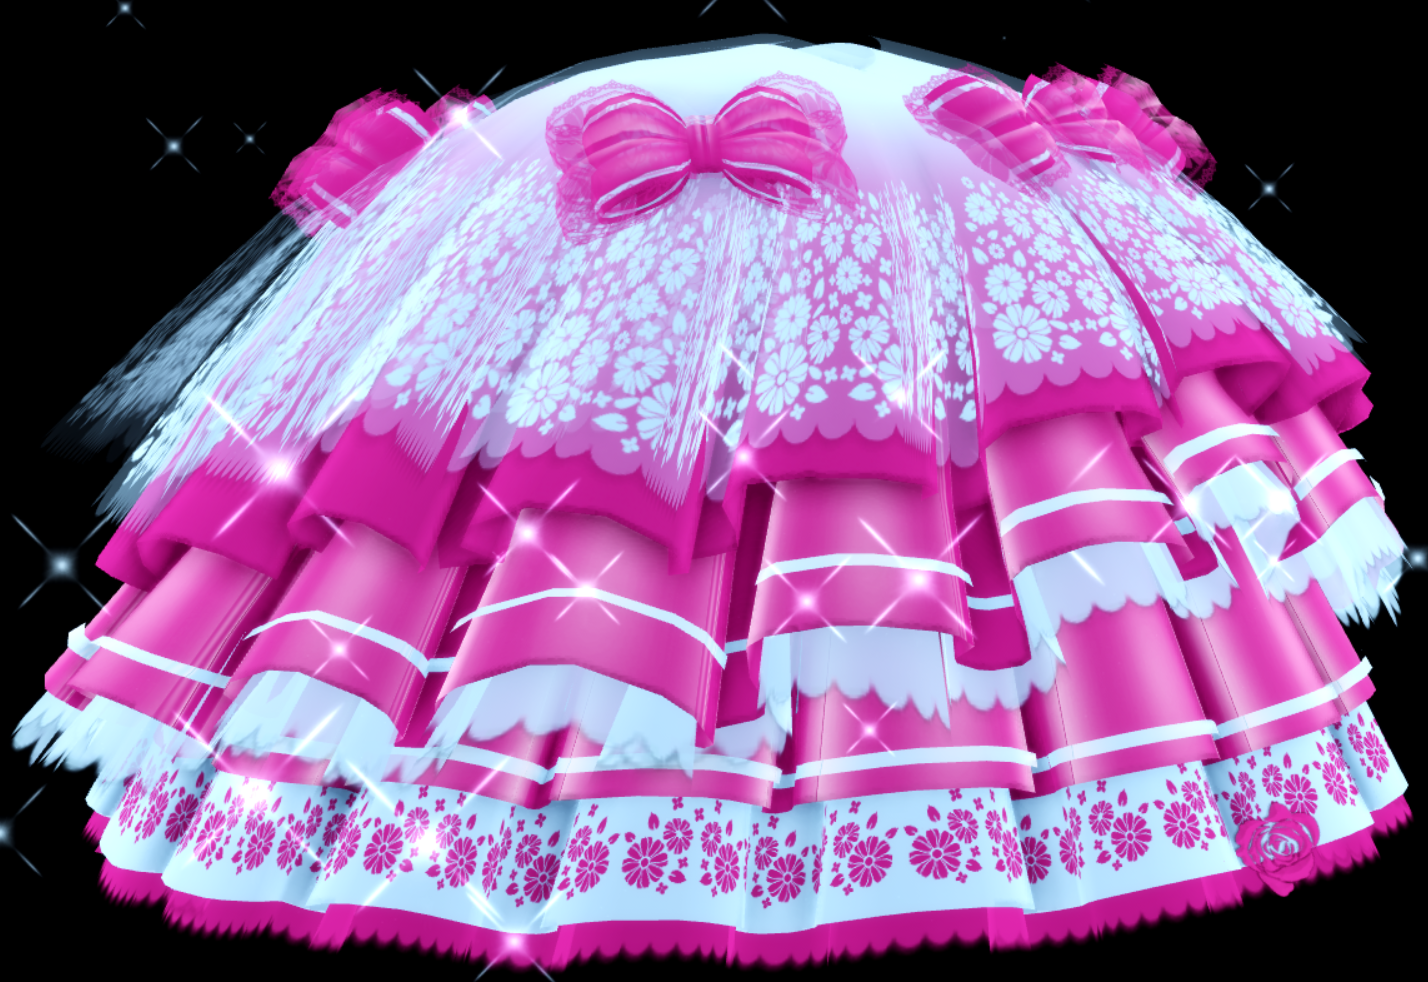 Miss Lady Rose Skirt Royale High Wiki Fandom